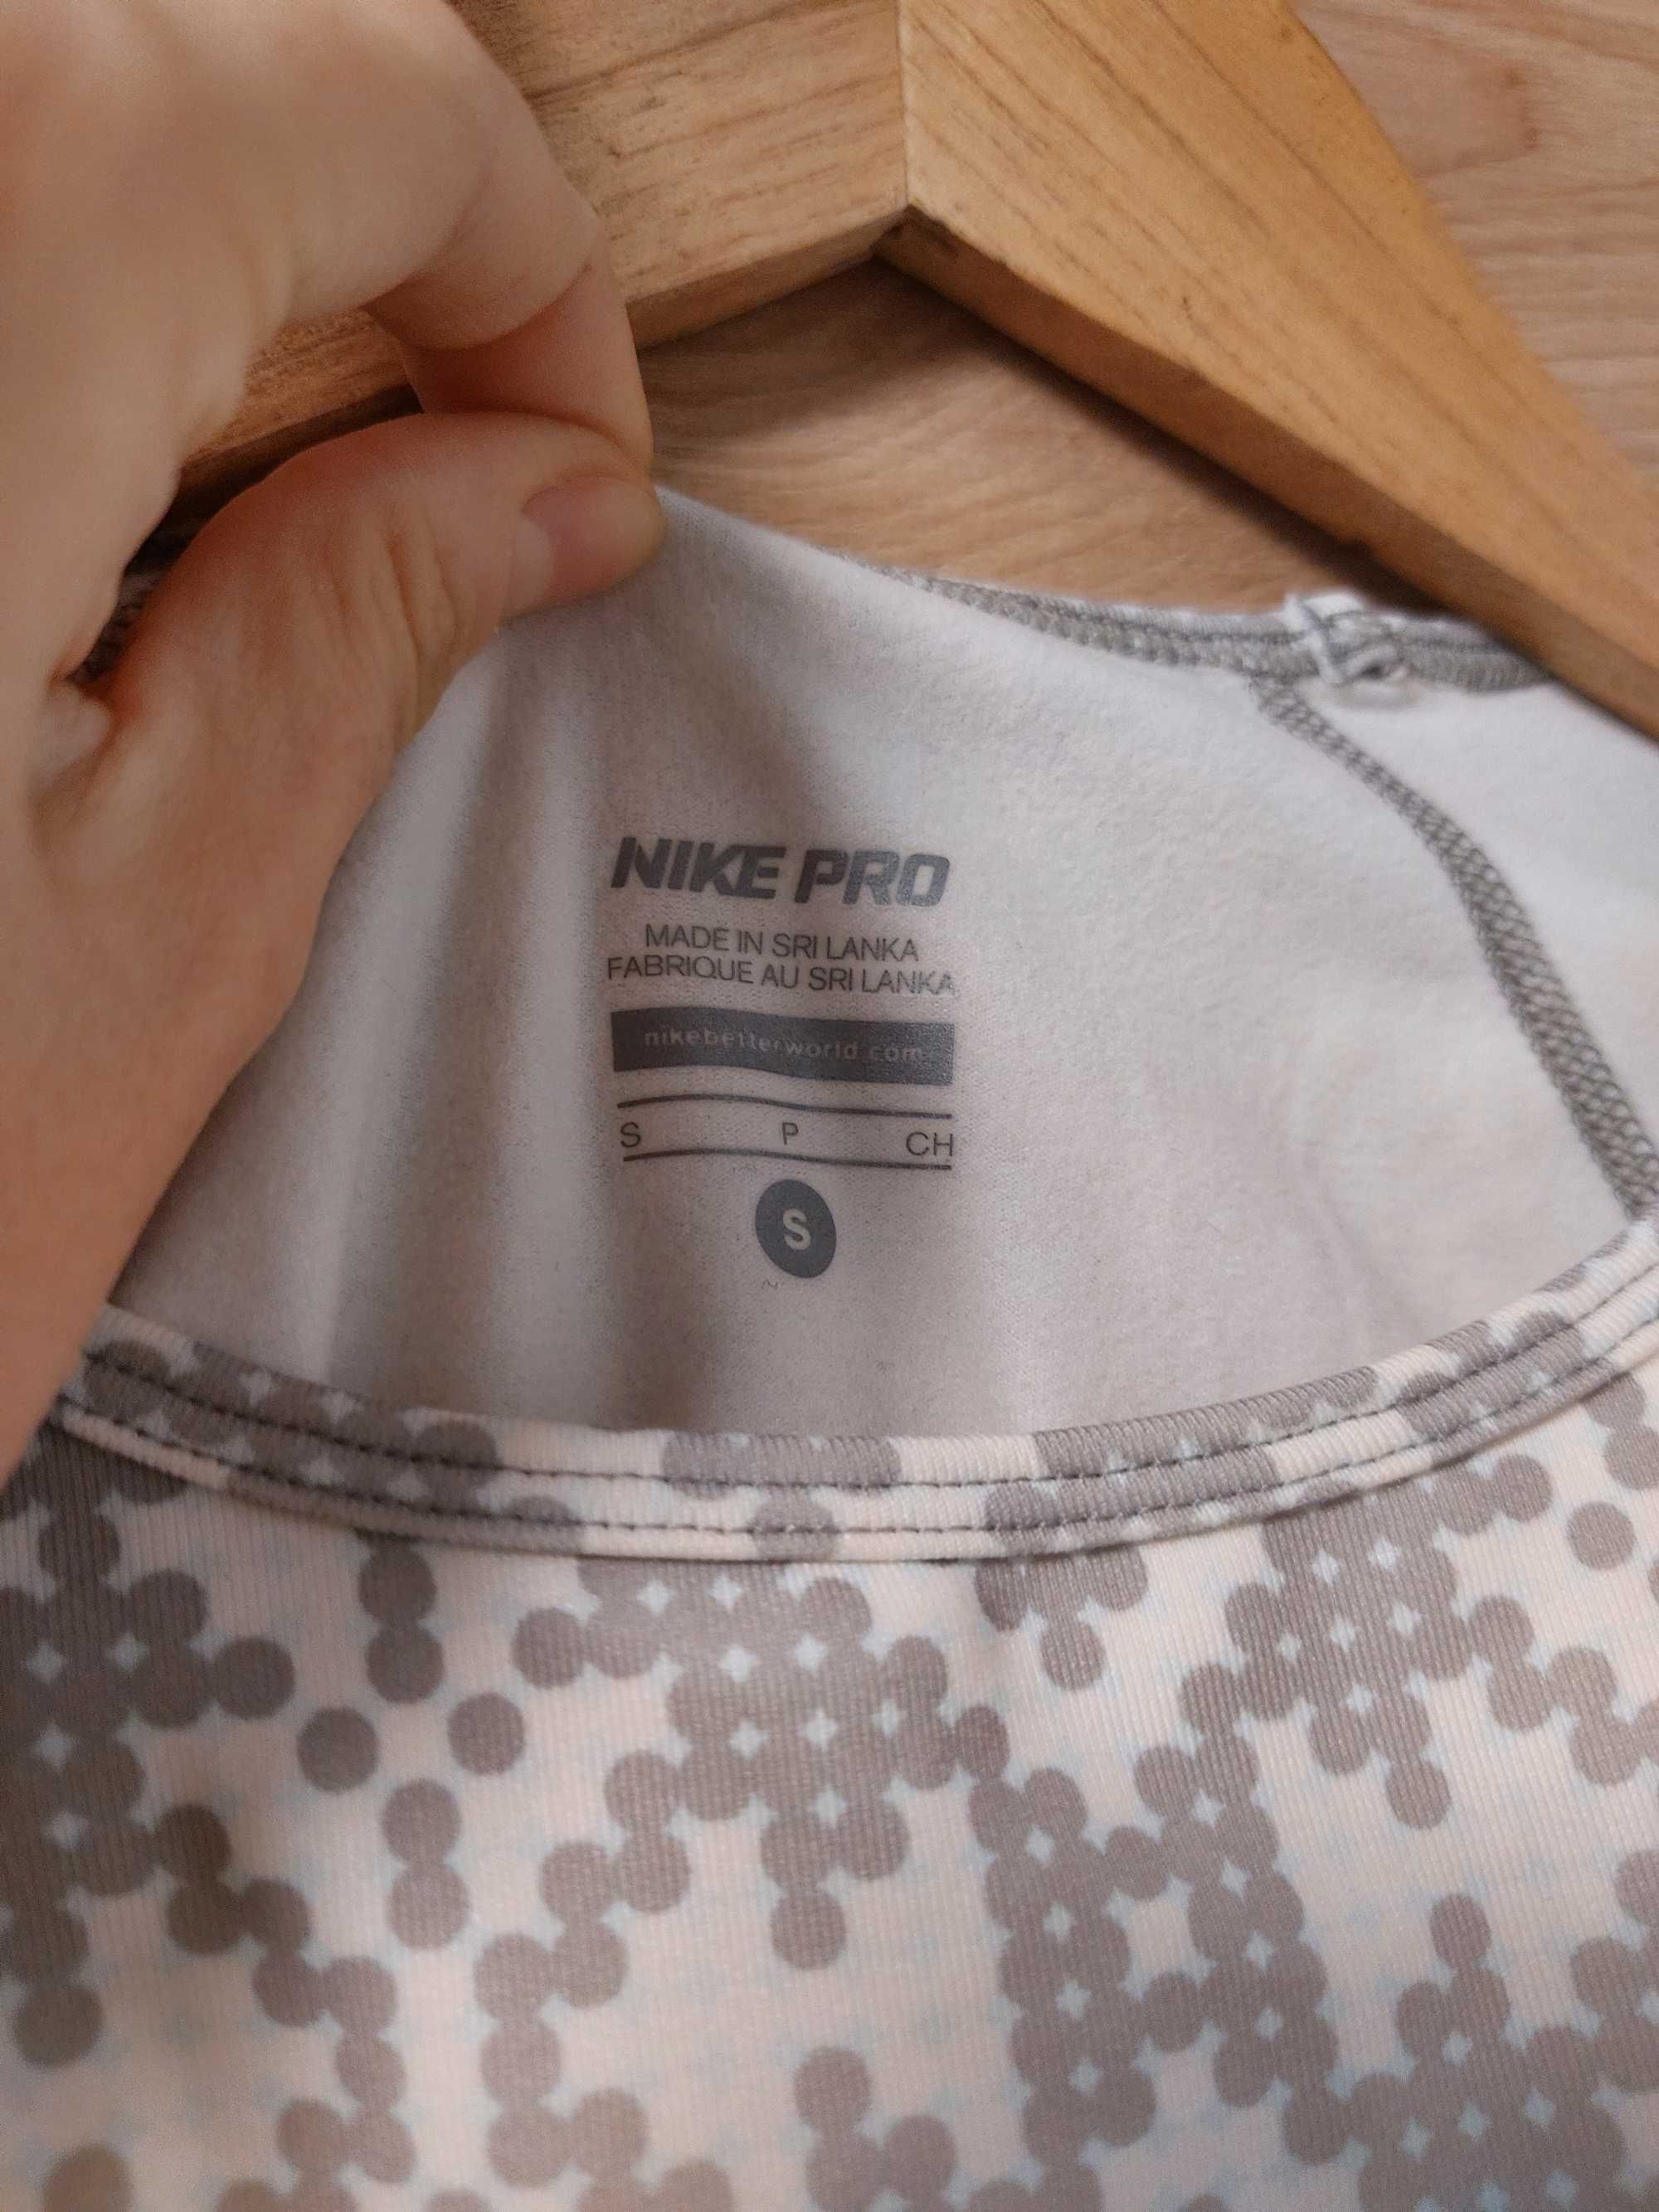 Женская термокофта, термобелье  Nike Pro размер S